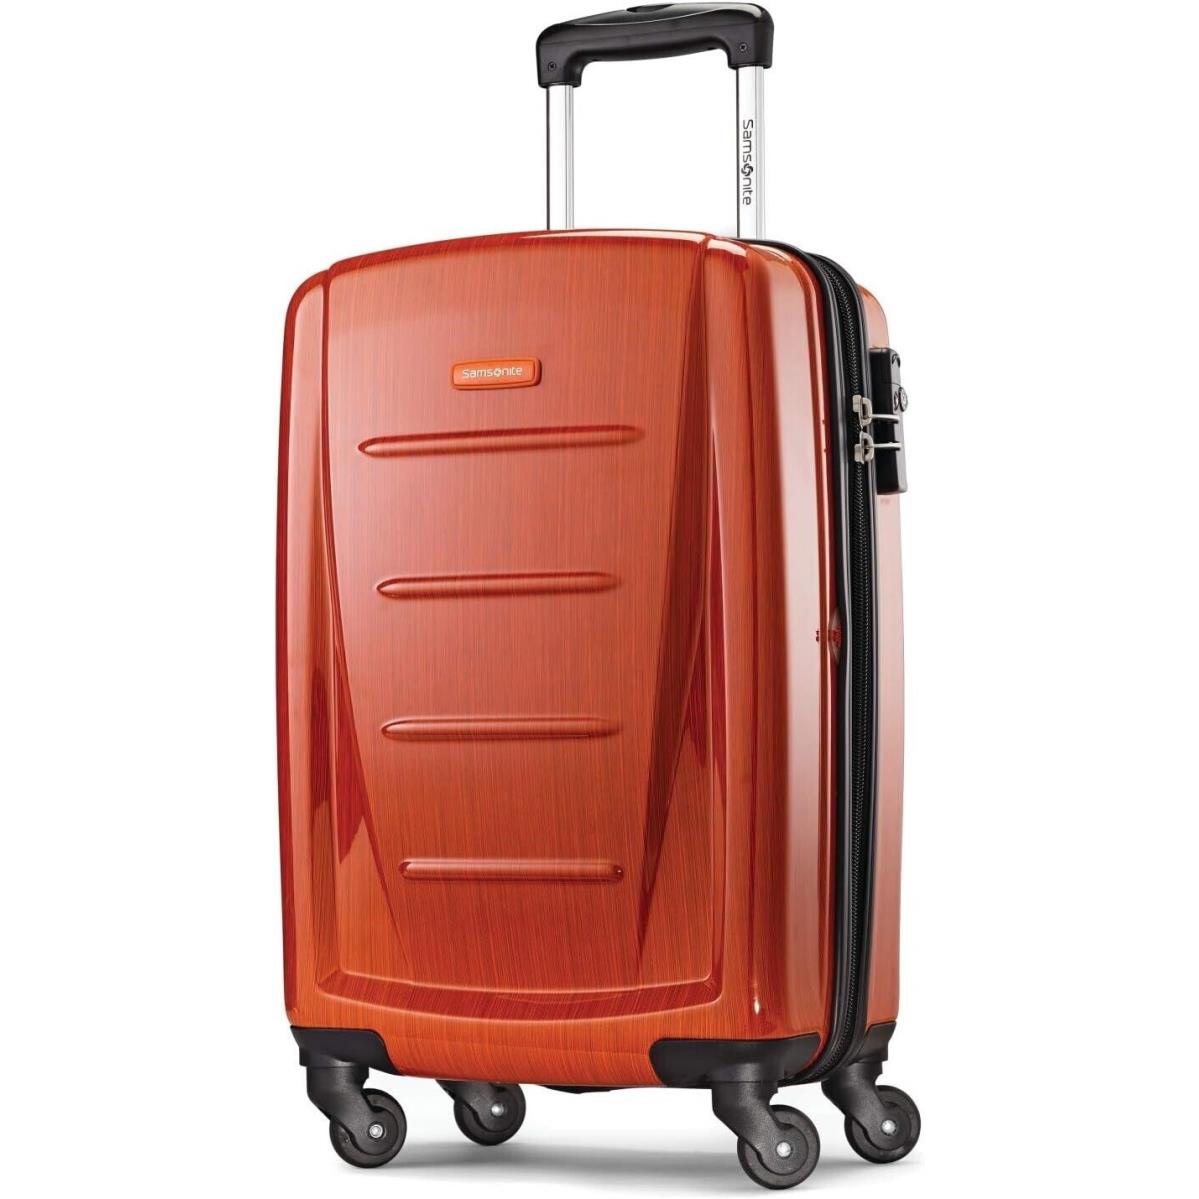 Samsonite Winfield 2 20 Carry On Hardside Spinner Luggage Suitcase Orange